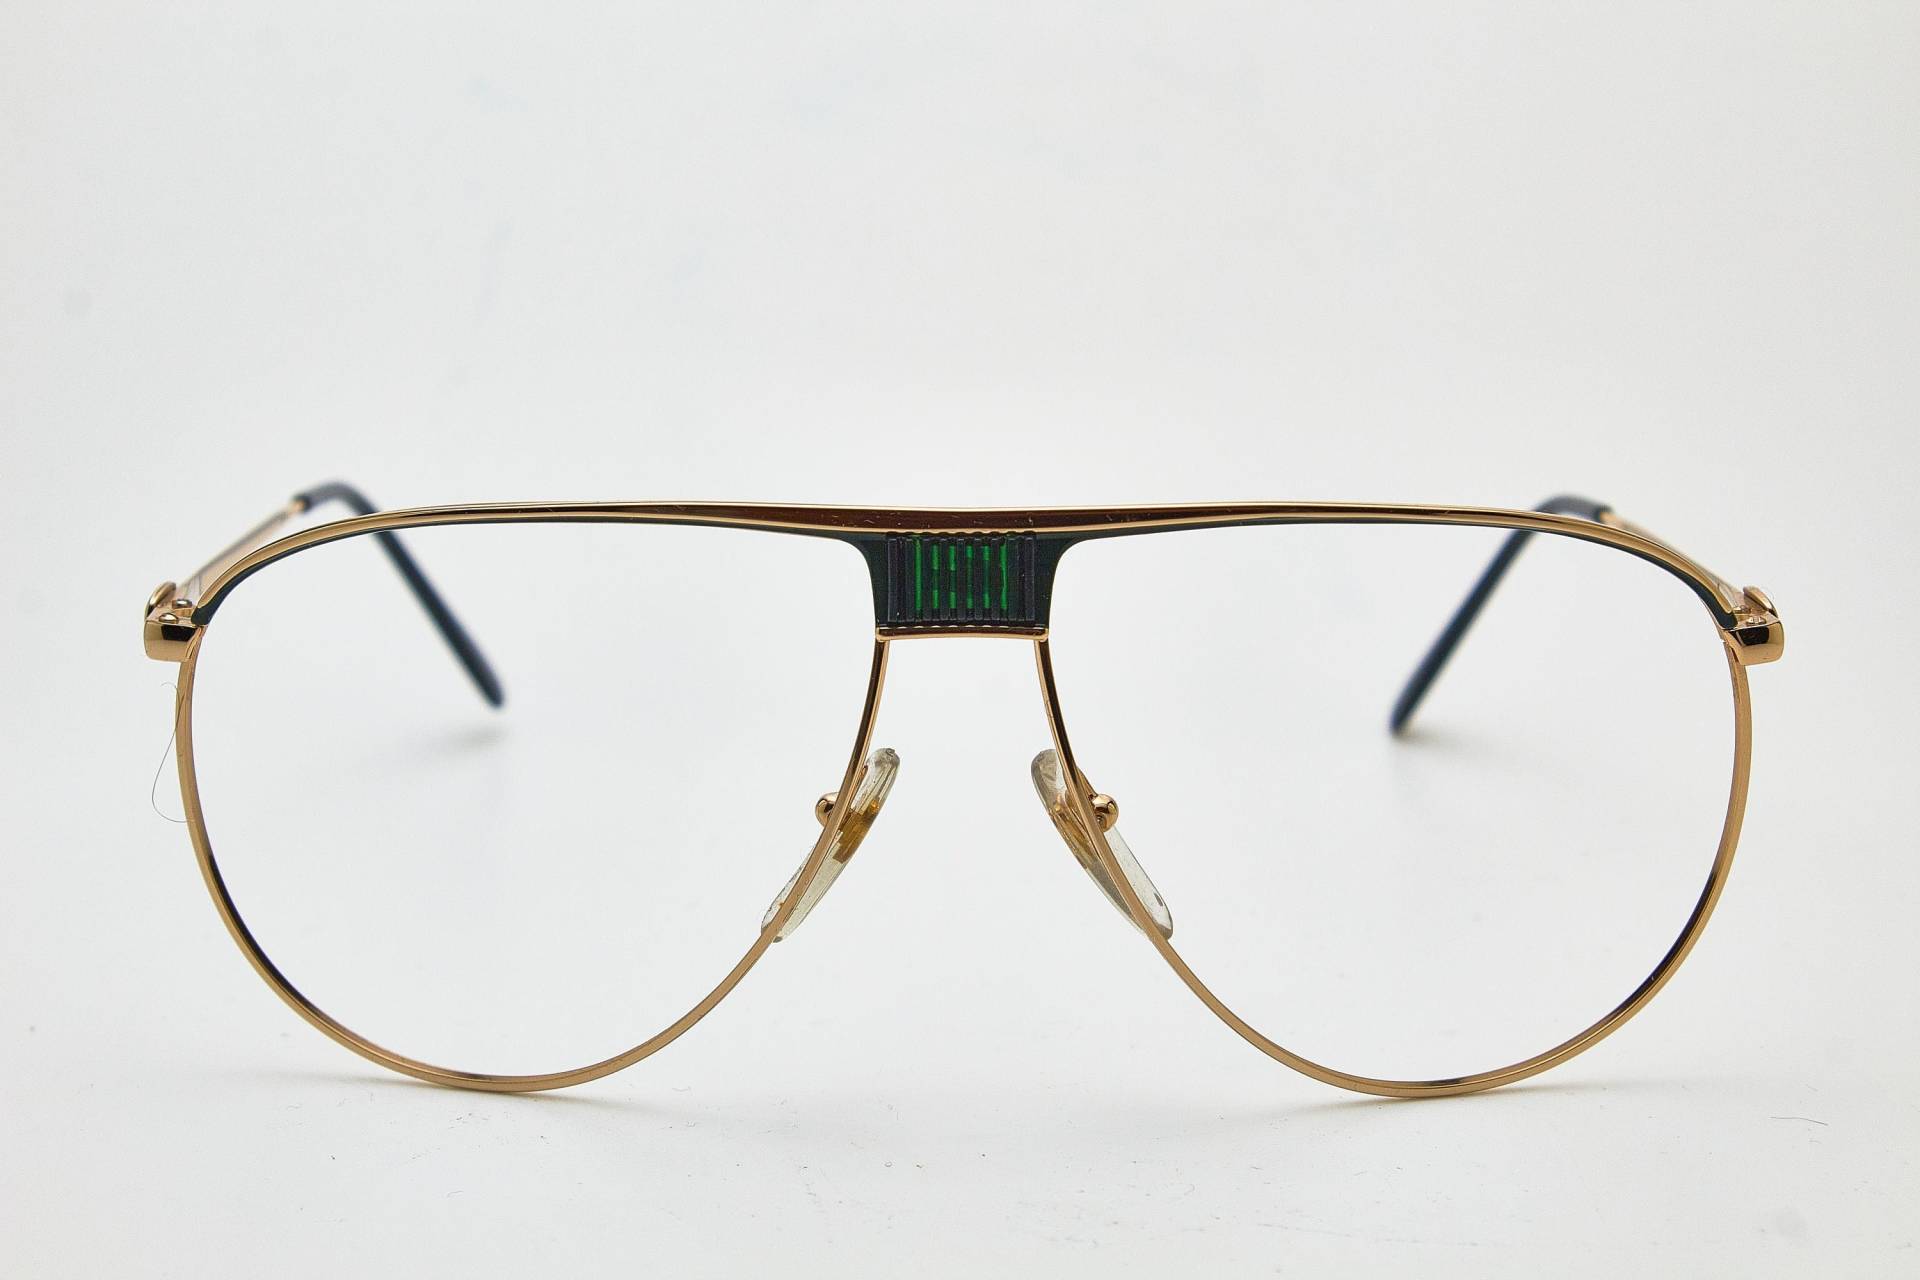 Lacoste Brille 191 Gold/Grün Metallrahmen, Vintage 1980Er, Fliegerbrille, Oversize Brille, Pilotenbrille, 80Er von VintageGlassesVault